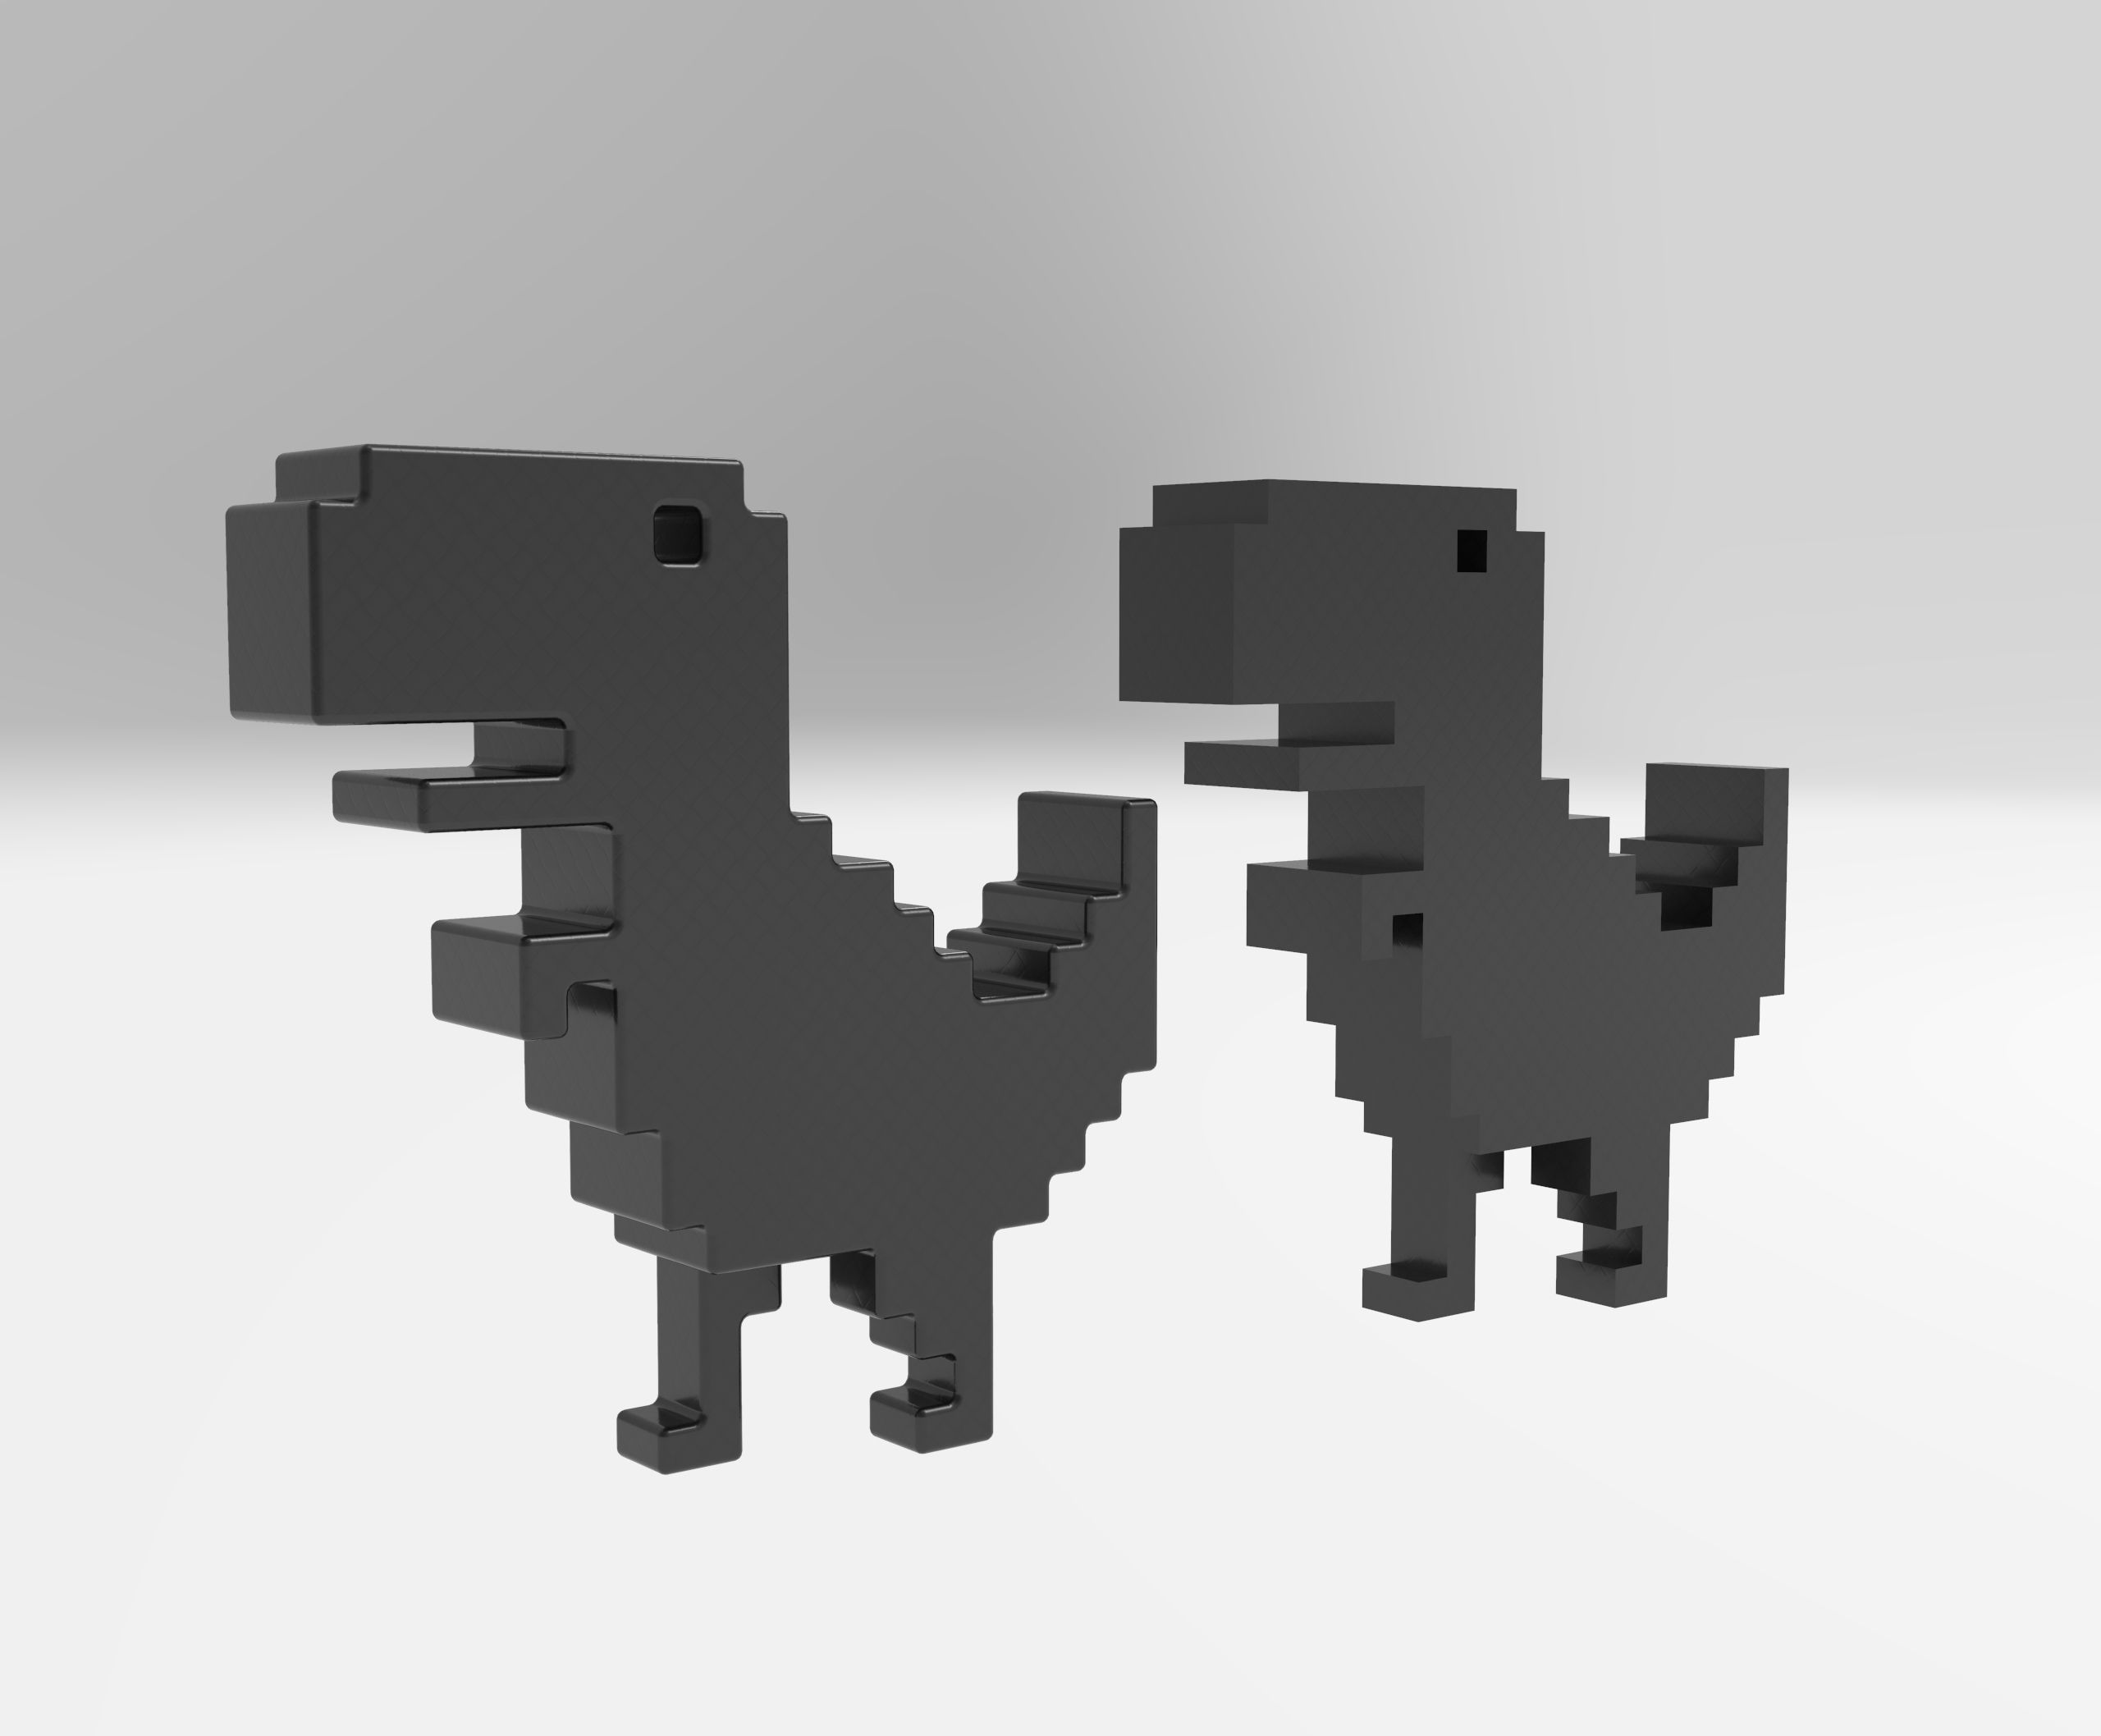 Offline Dinosaur Game Magnets by Julia Ebert